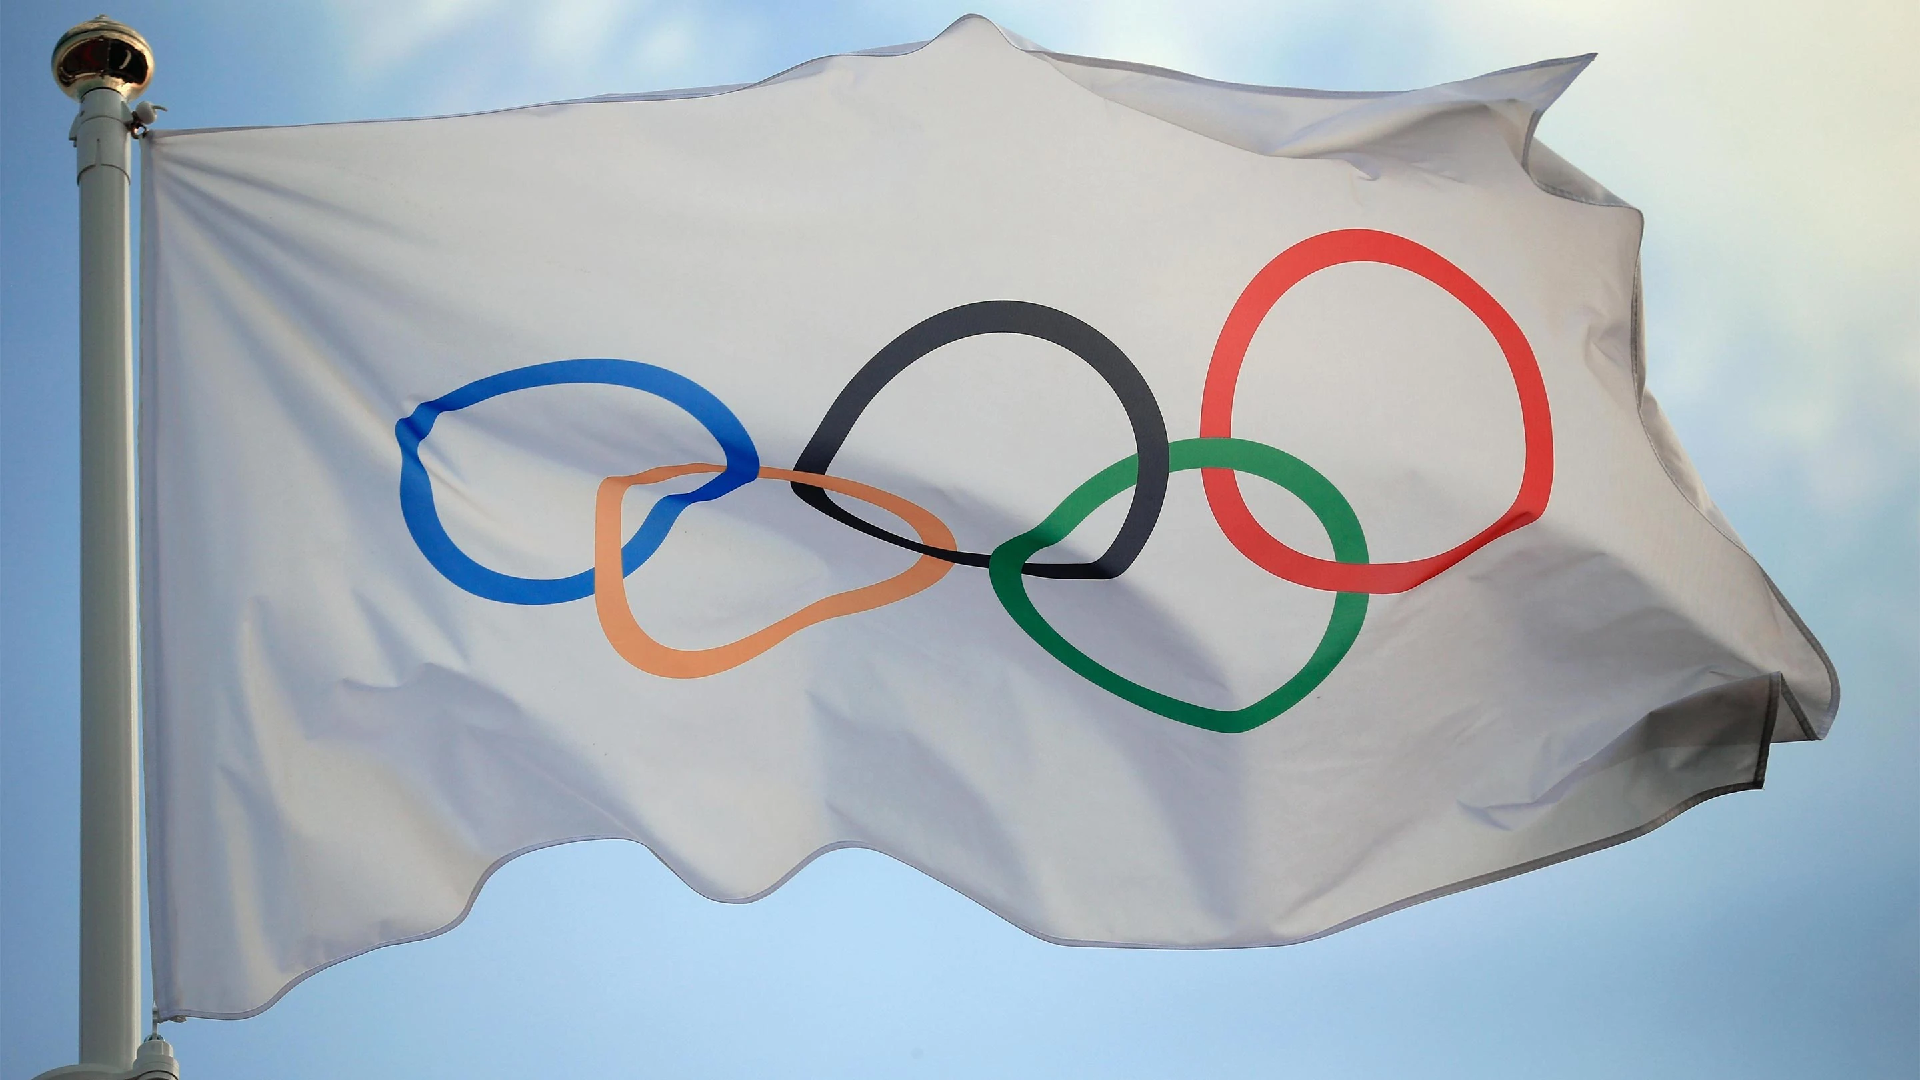 Ioc Reiterates Olympic Games Athlete Participation Beyond Politics Cgtn